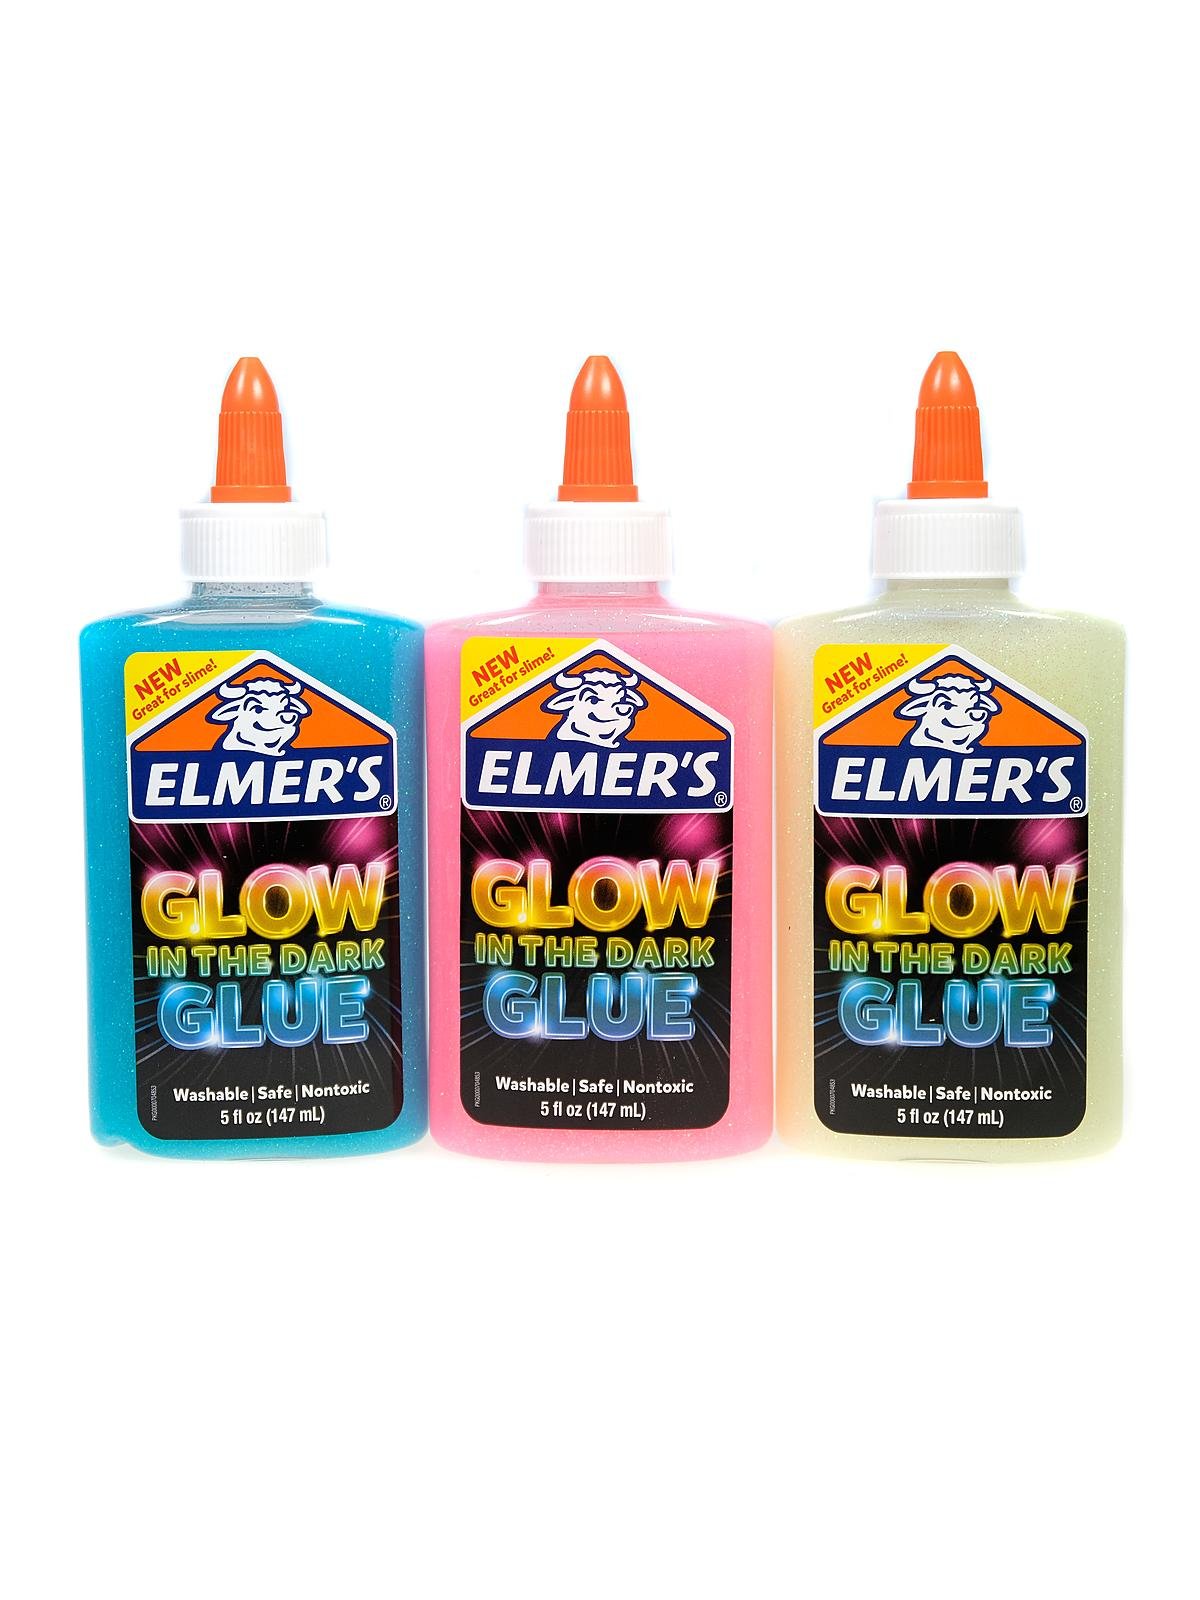 Elmer's Slime Kit - Glow in the Dark Slime Kit, Natural and Blue